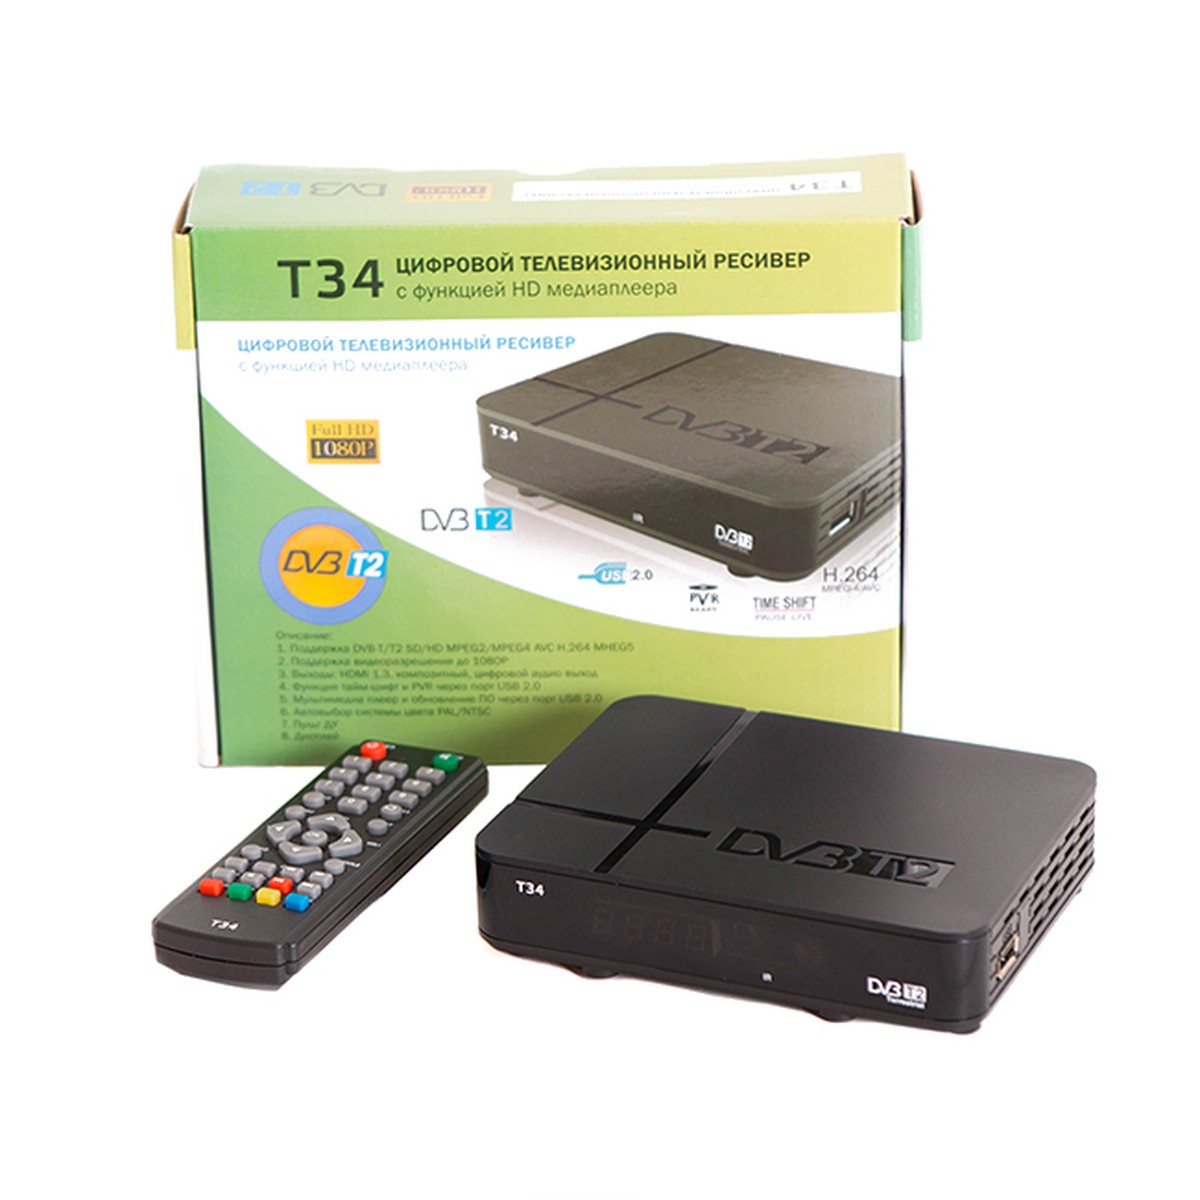 Приставки для цифрового телевидения спб. Цифровая приставка DVB-t2 t34. Цифровой тюнер DVB-t2. Цифровая приставка ДВБ т2. Цифровой ресивер TV DVB t2.